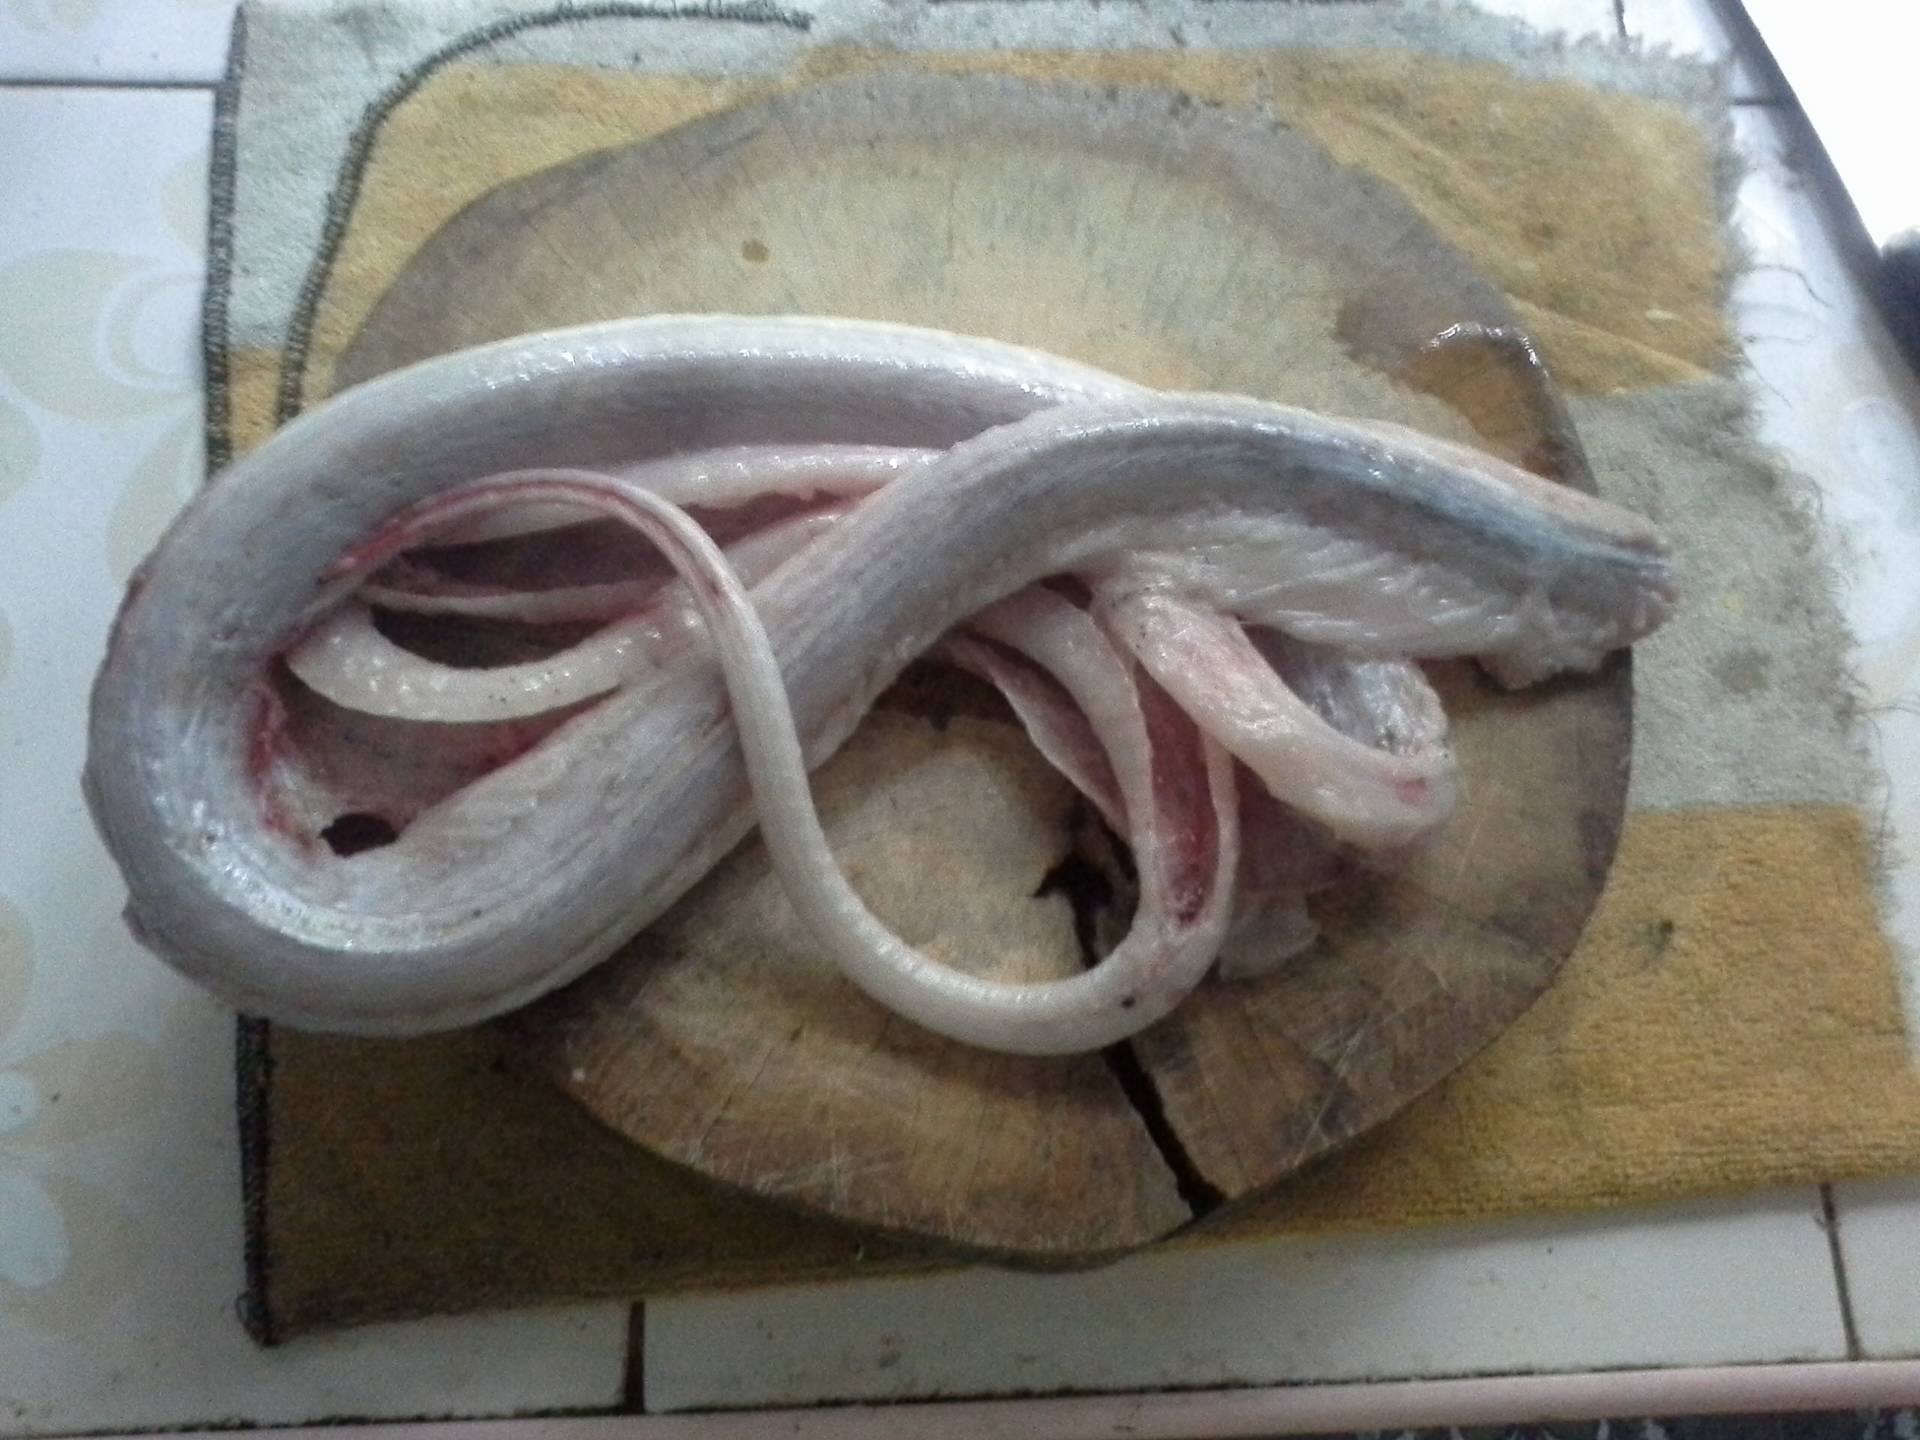 Skinned monocled cobra before cooking (raw).